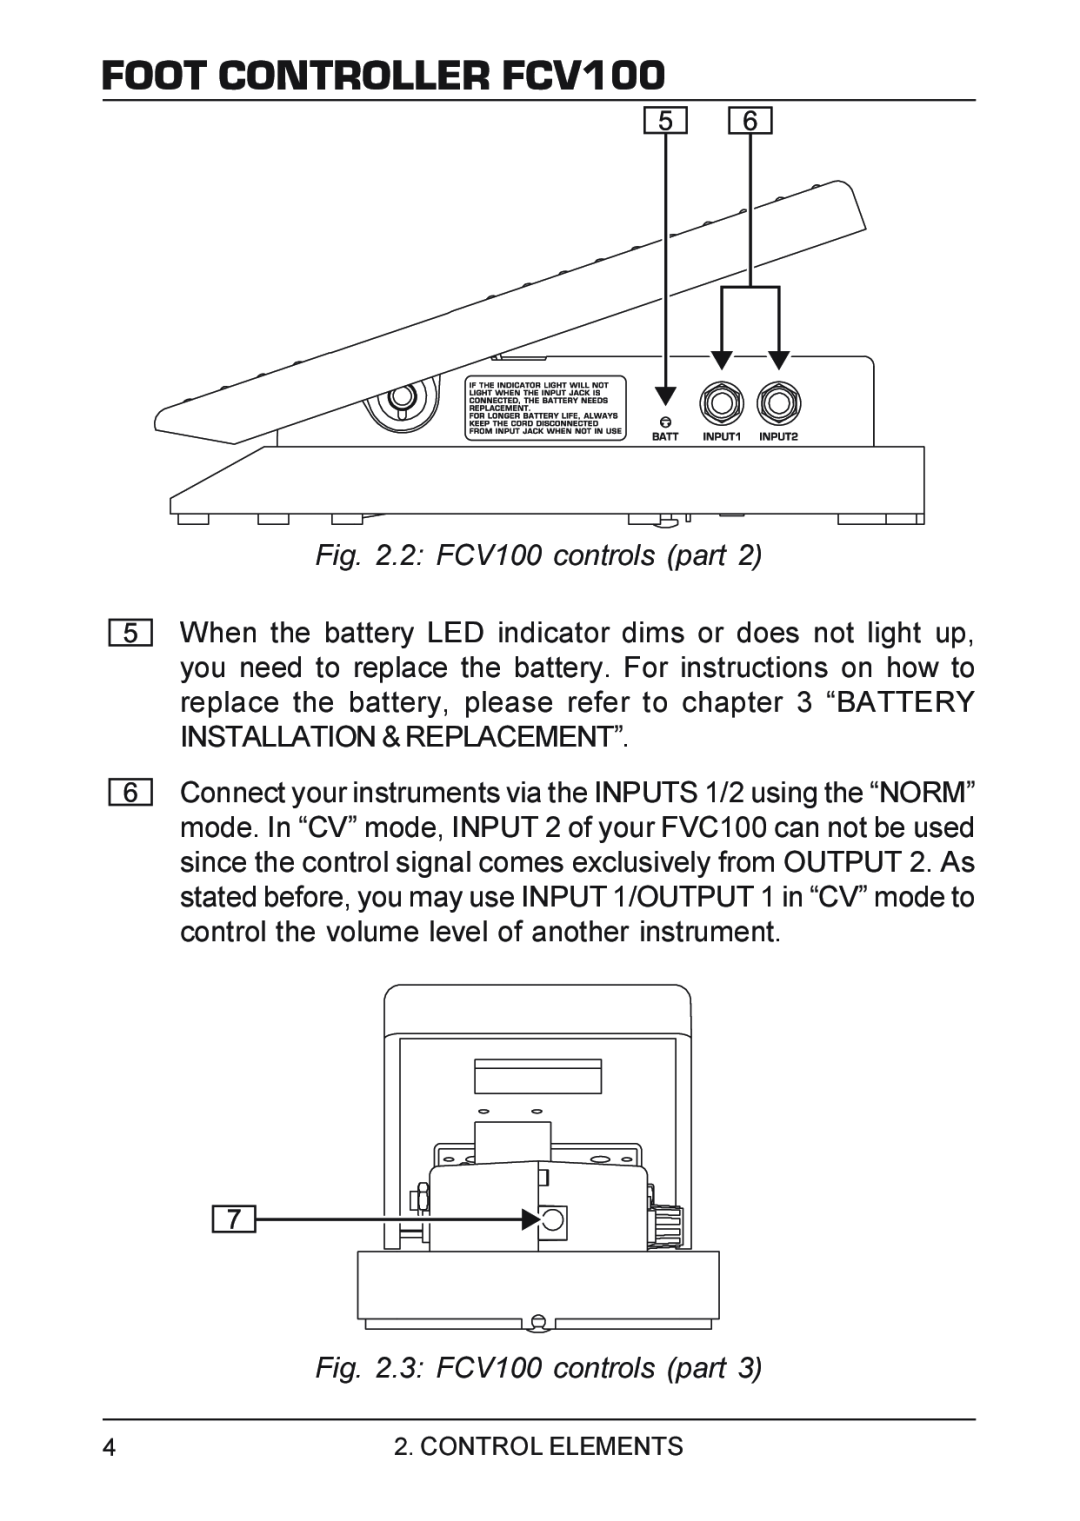 Behringer manual 2 FCV100 controls part, 3 FCV100 controls part, FOOT CONTROLLER FCV100 